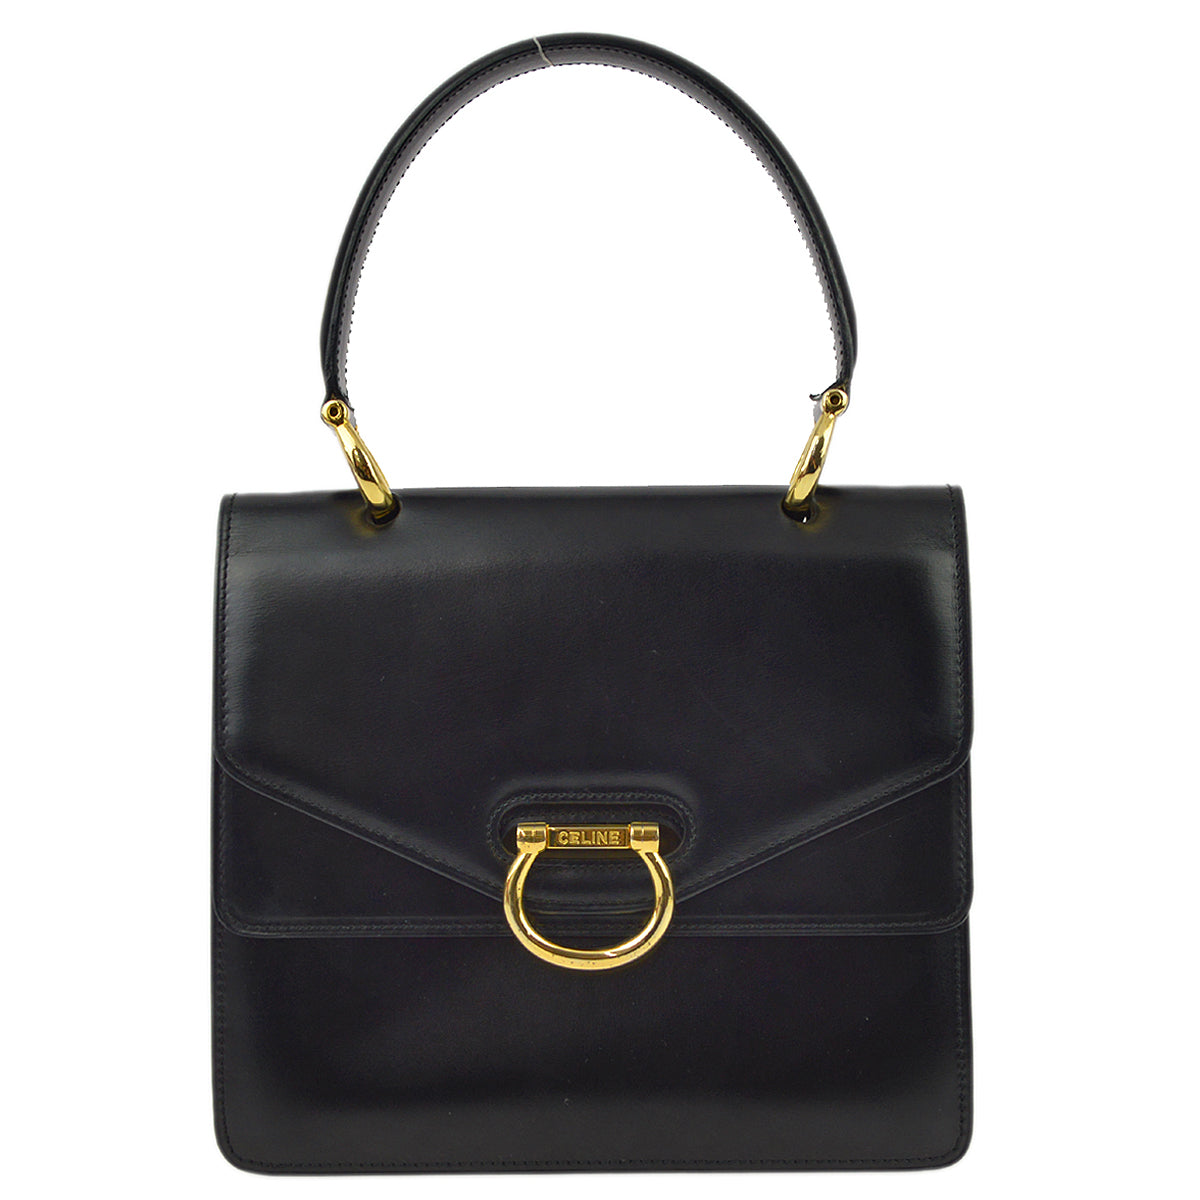 Celine Black Double Flap Handbag